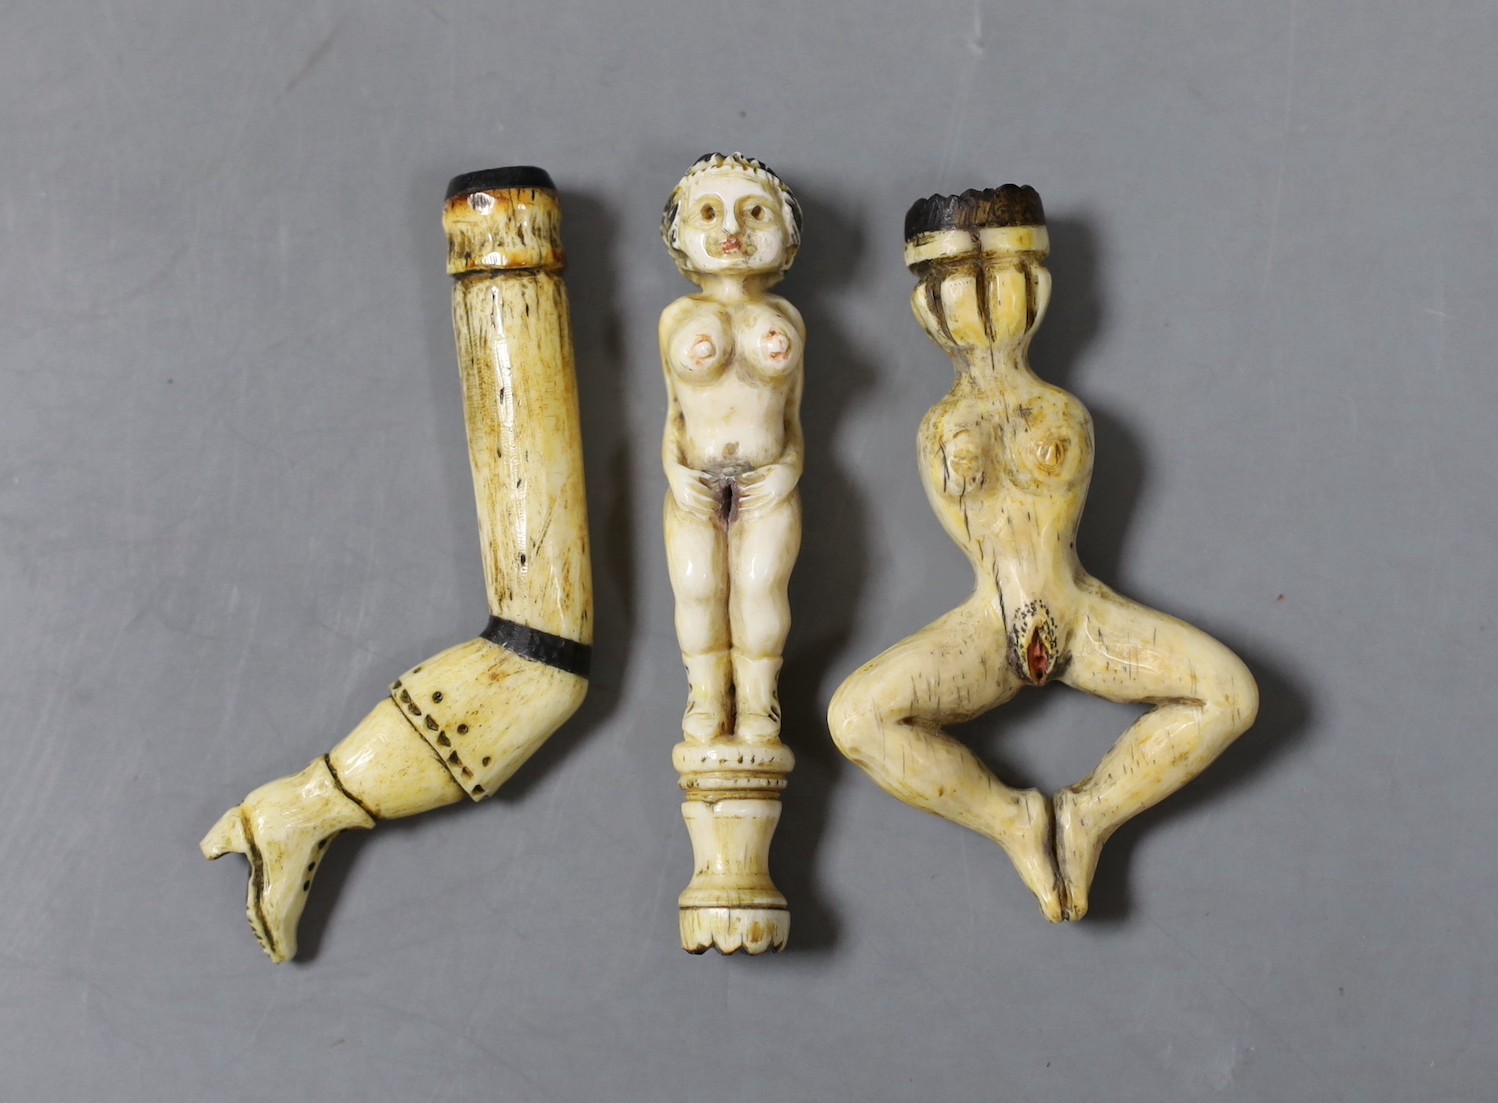 Three prisoner of war bone pipe tamper figures